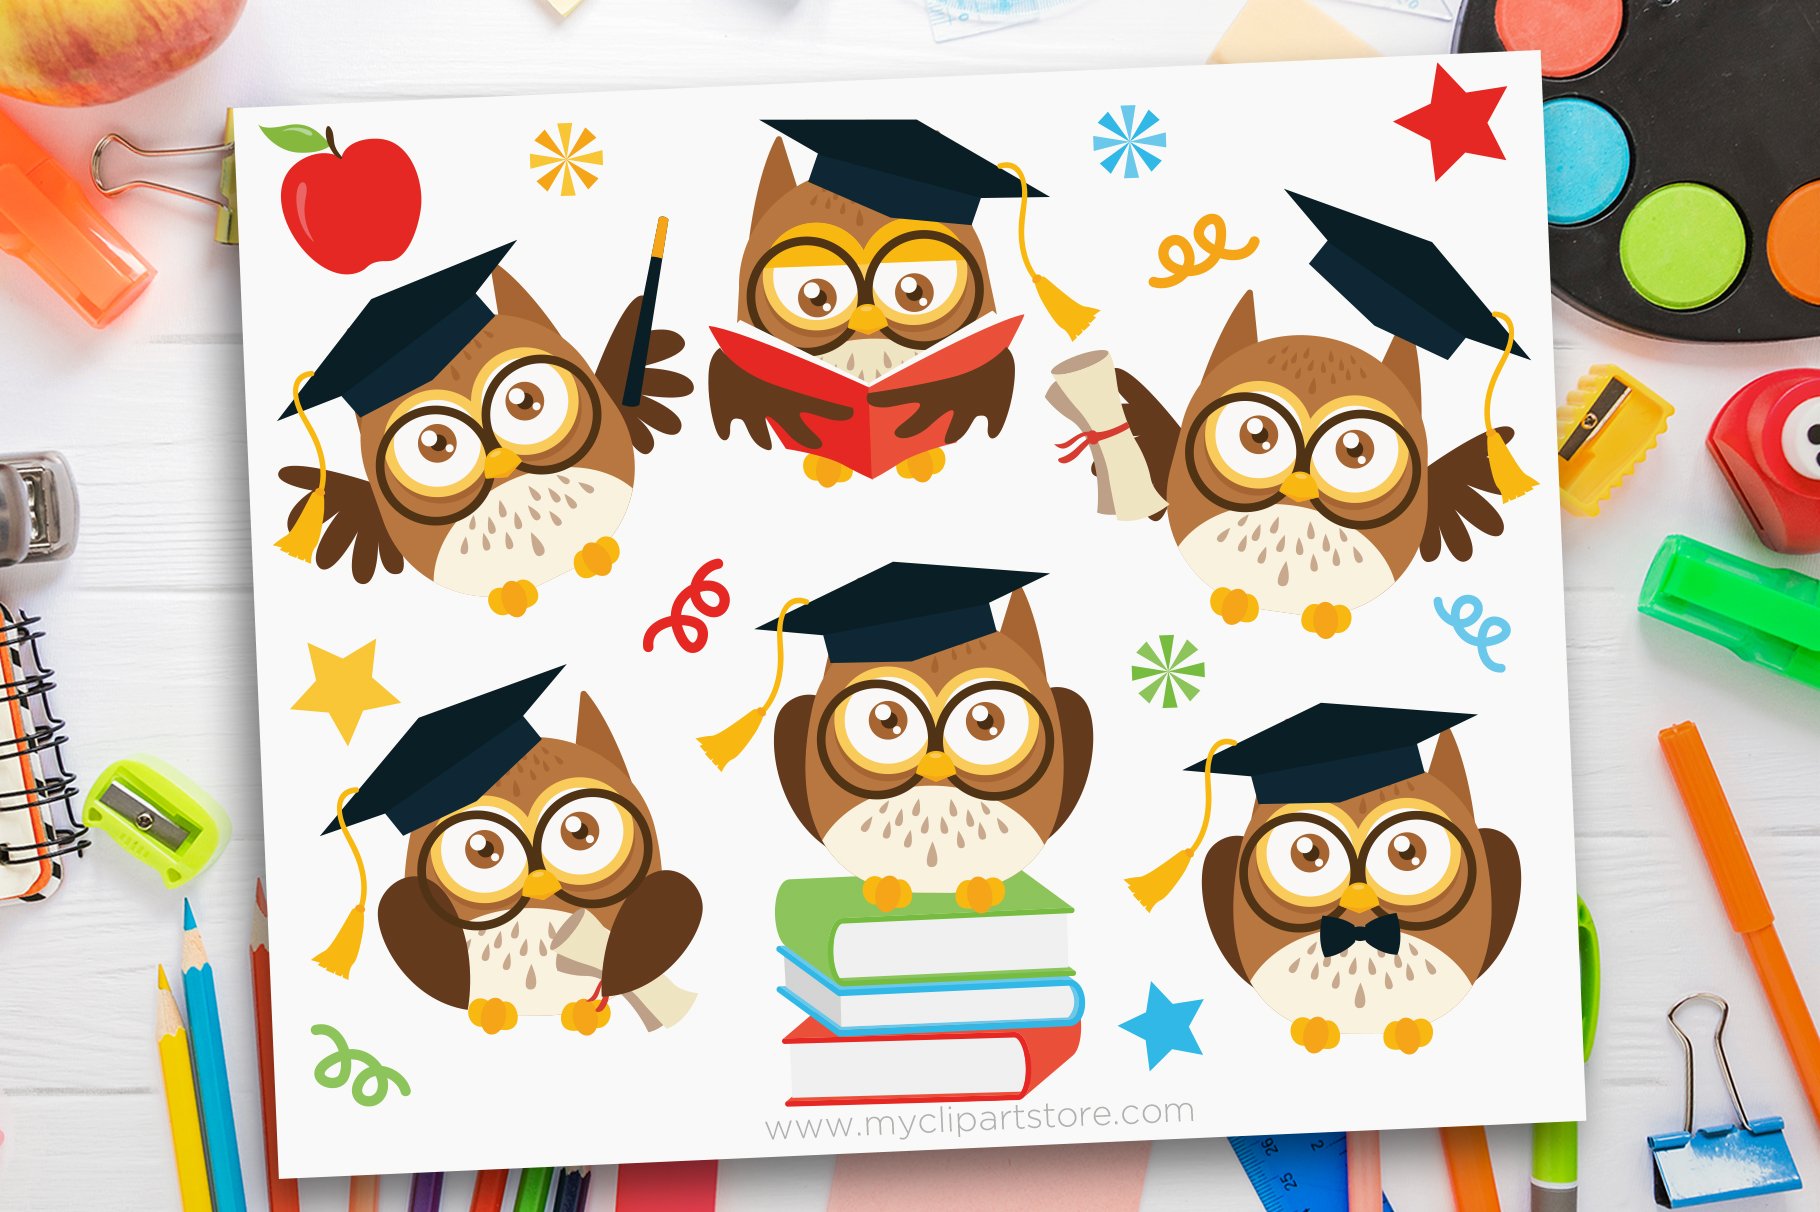 Graduation Owls Clipart cover image.